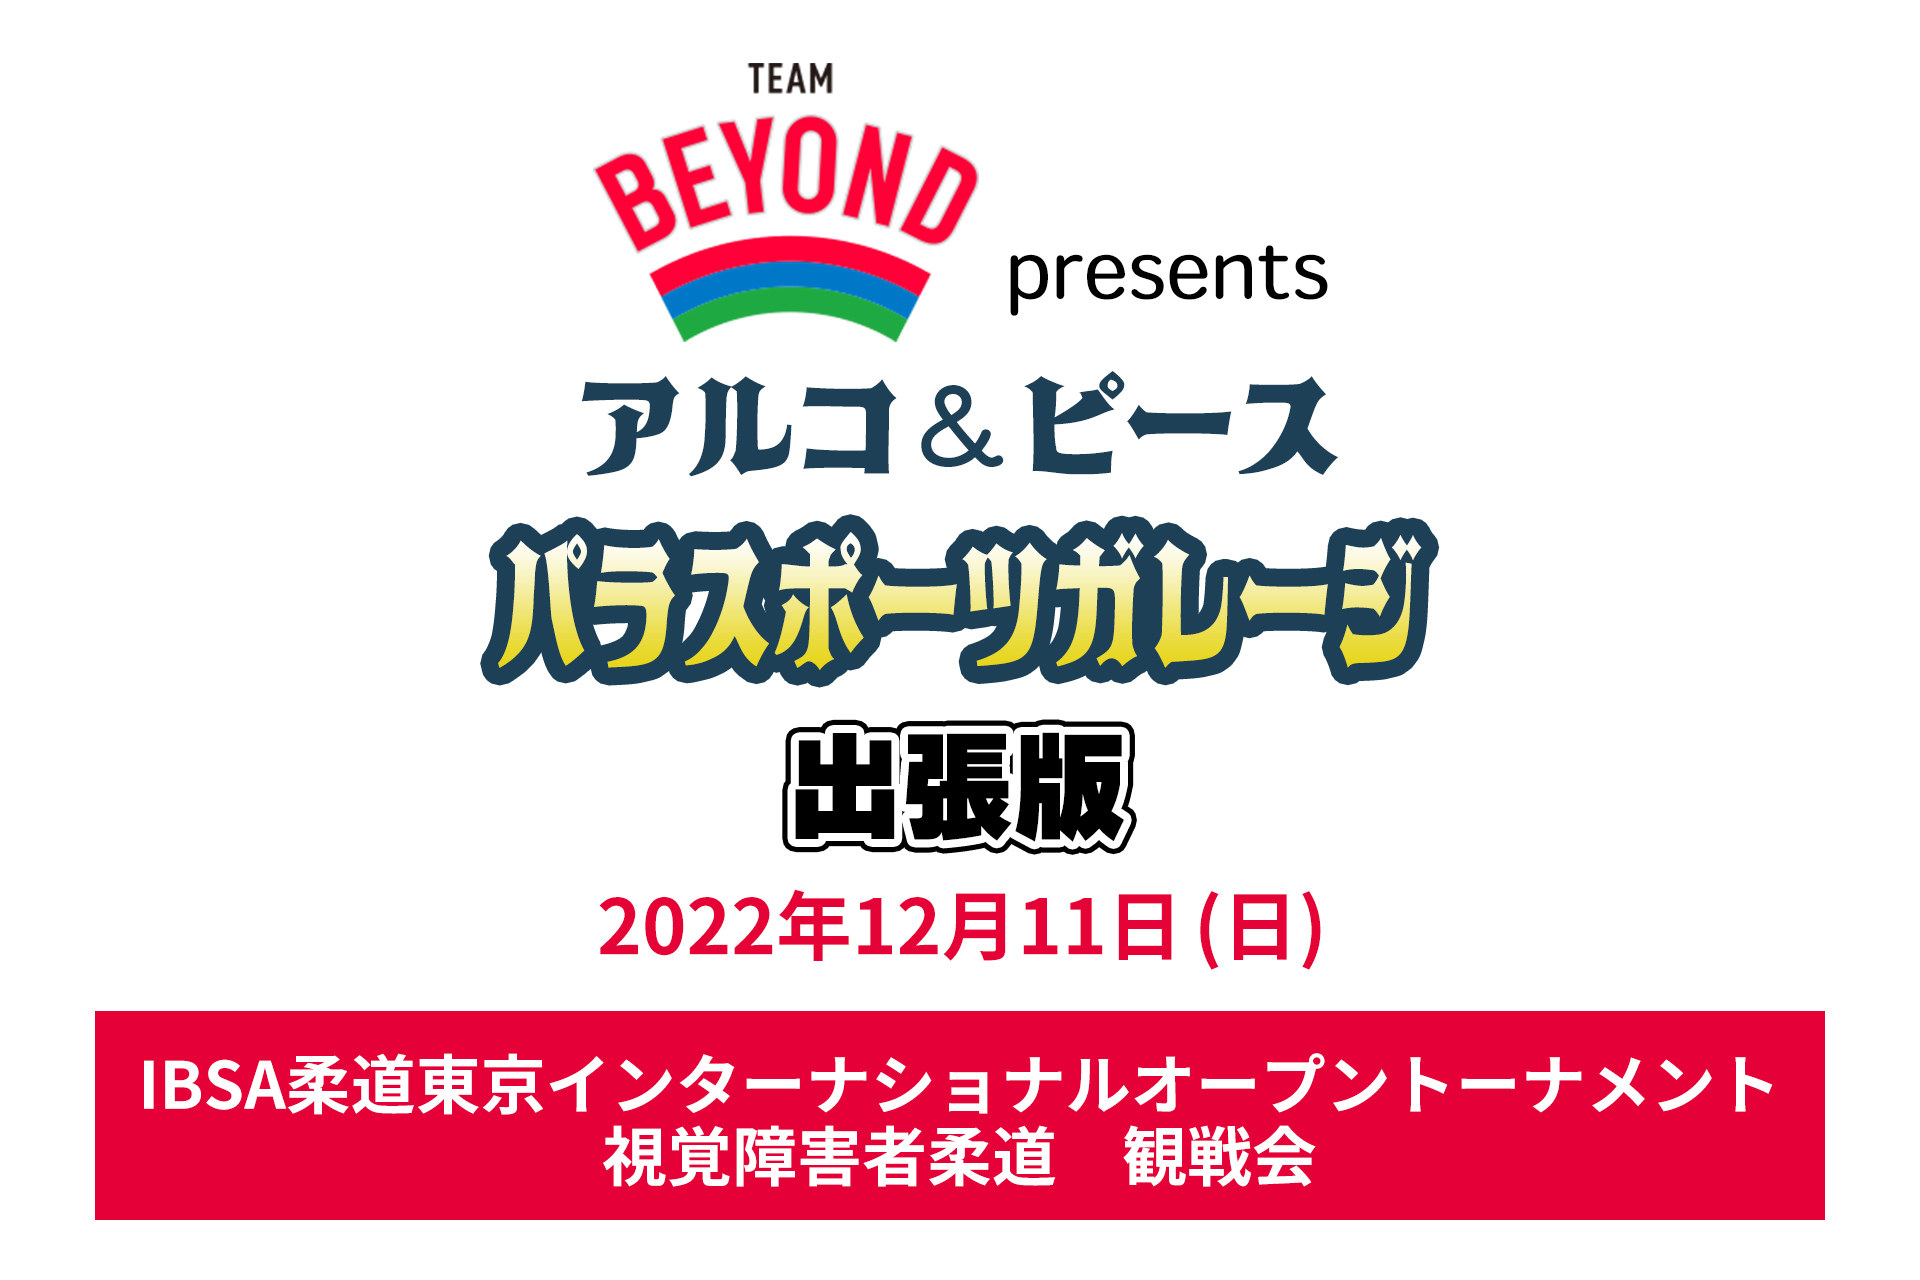 TEAM BEYOND presents アルコ&ピース  パラスポーツガレージ出張版<br>「IBSA柔道東京インターナショナルオープントーナメント」 視覚障害者柔道観戦会